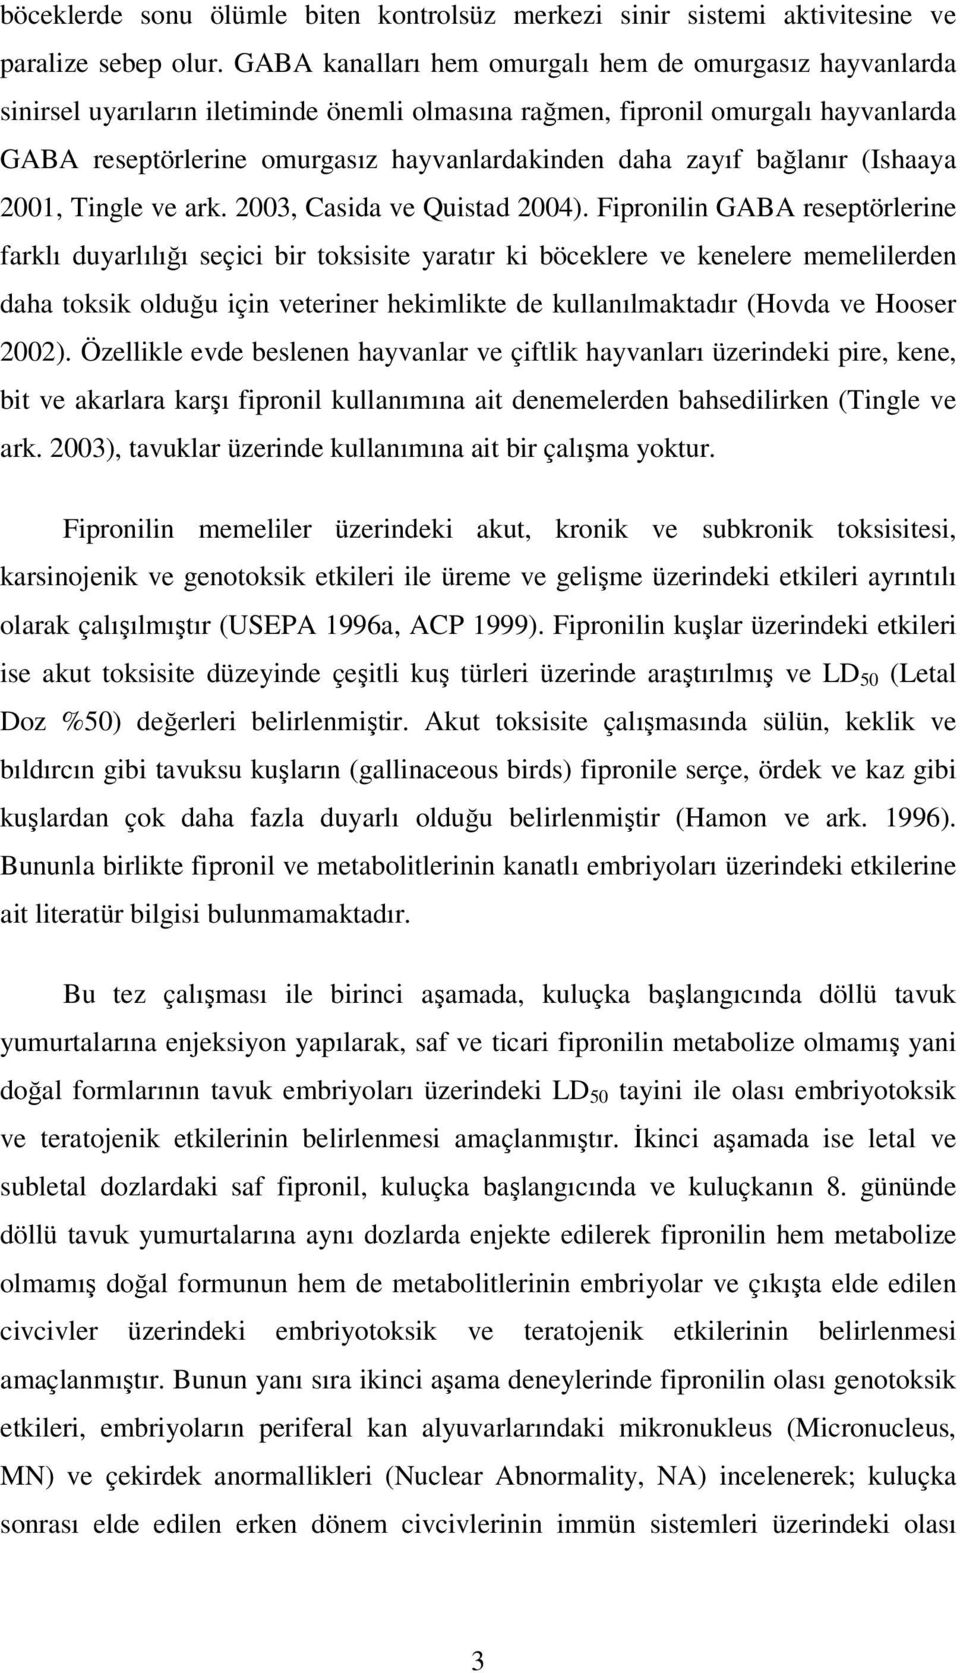 zayıf bağlanır (Ishaaya 2001, Tingle ve ark. 2003, Casida ve Quistad 2004).